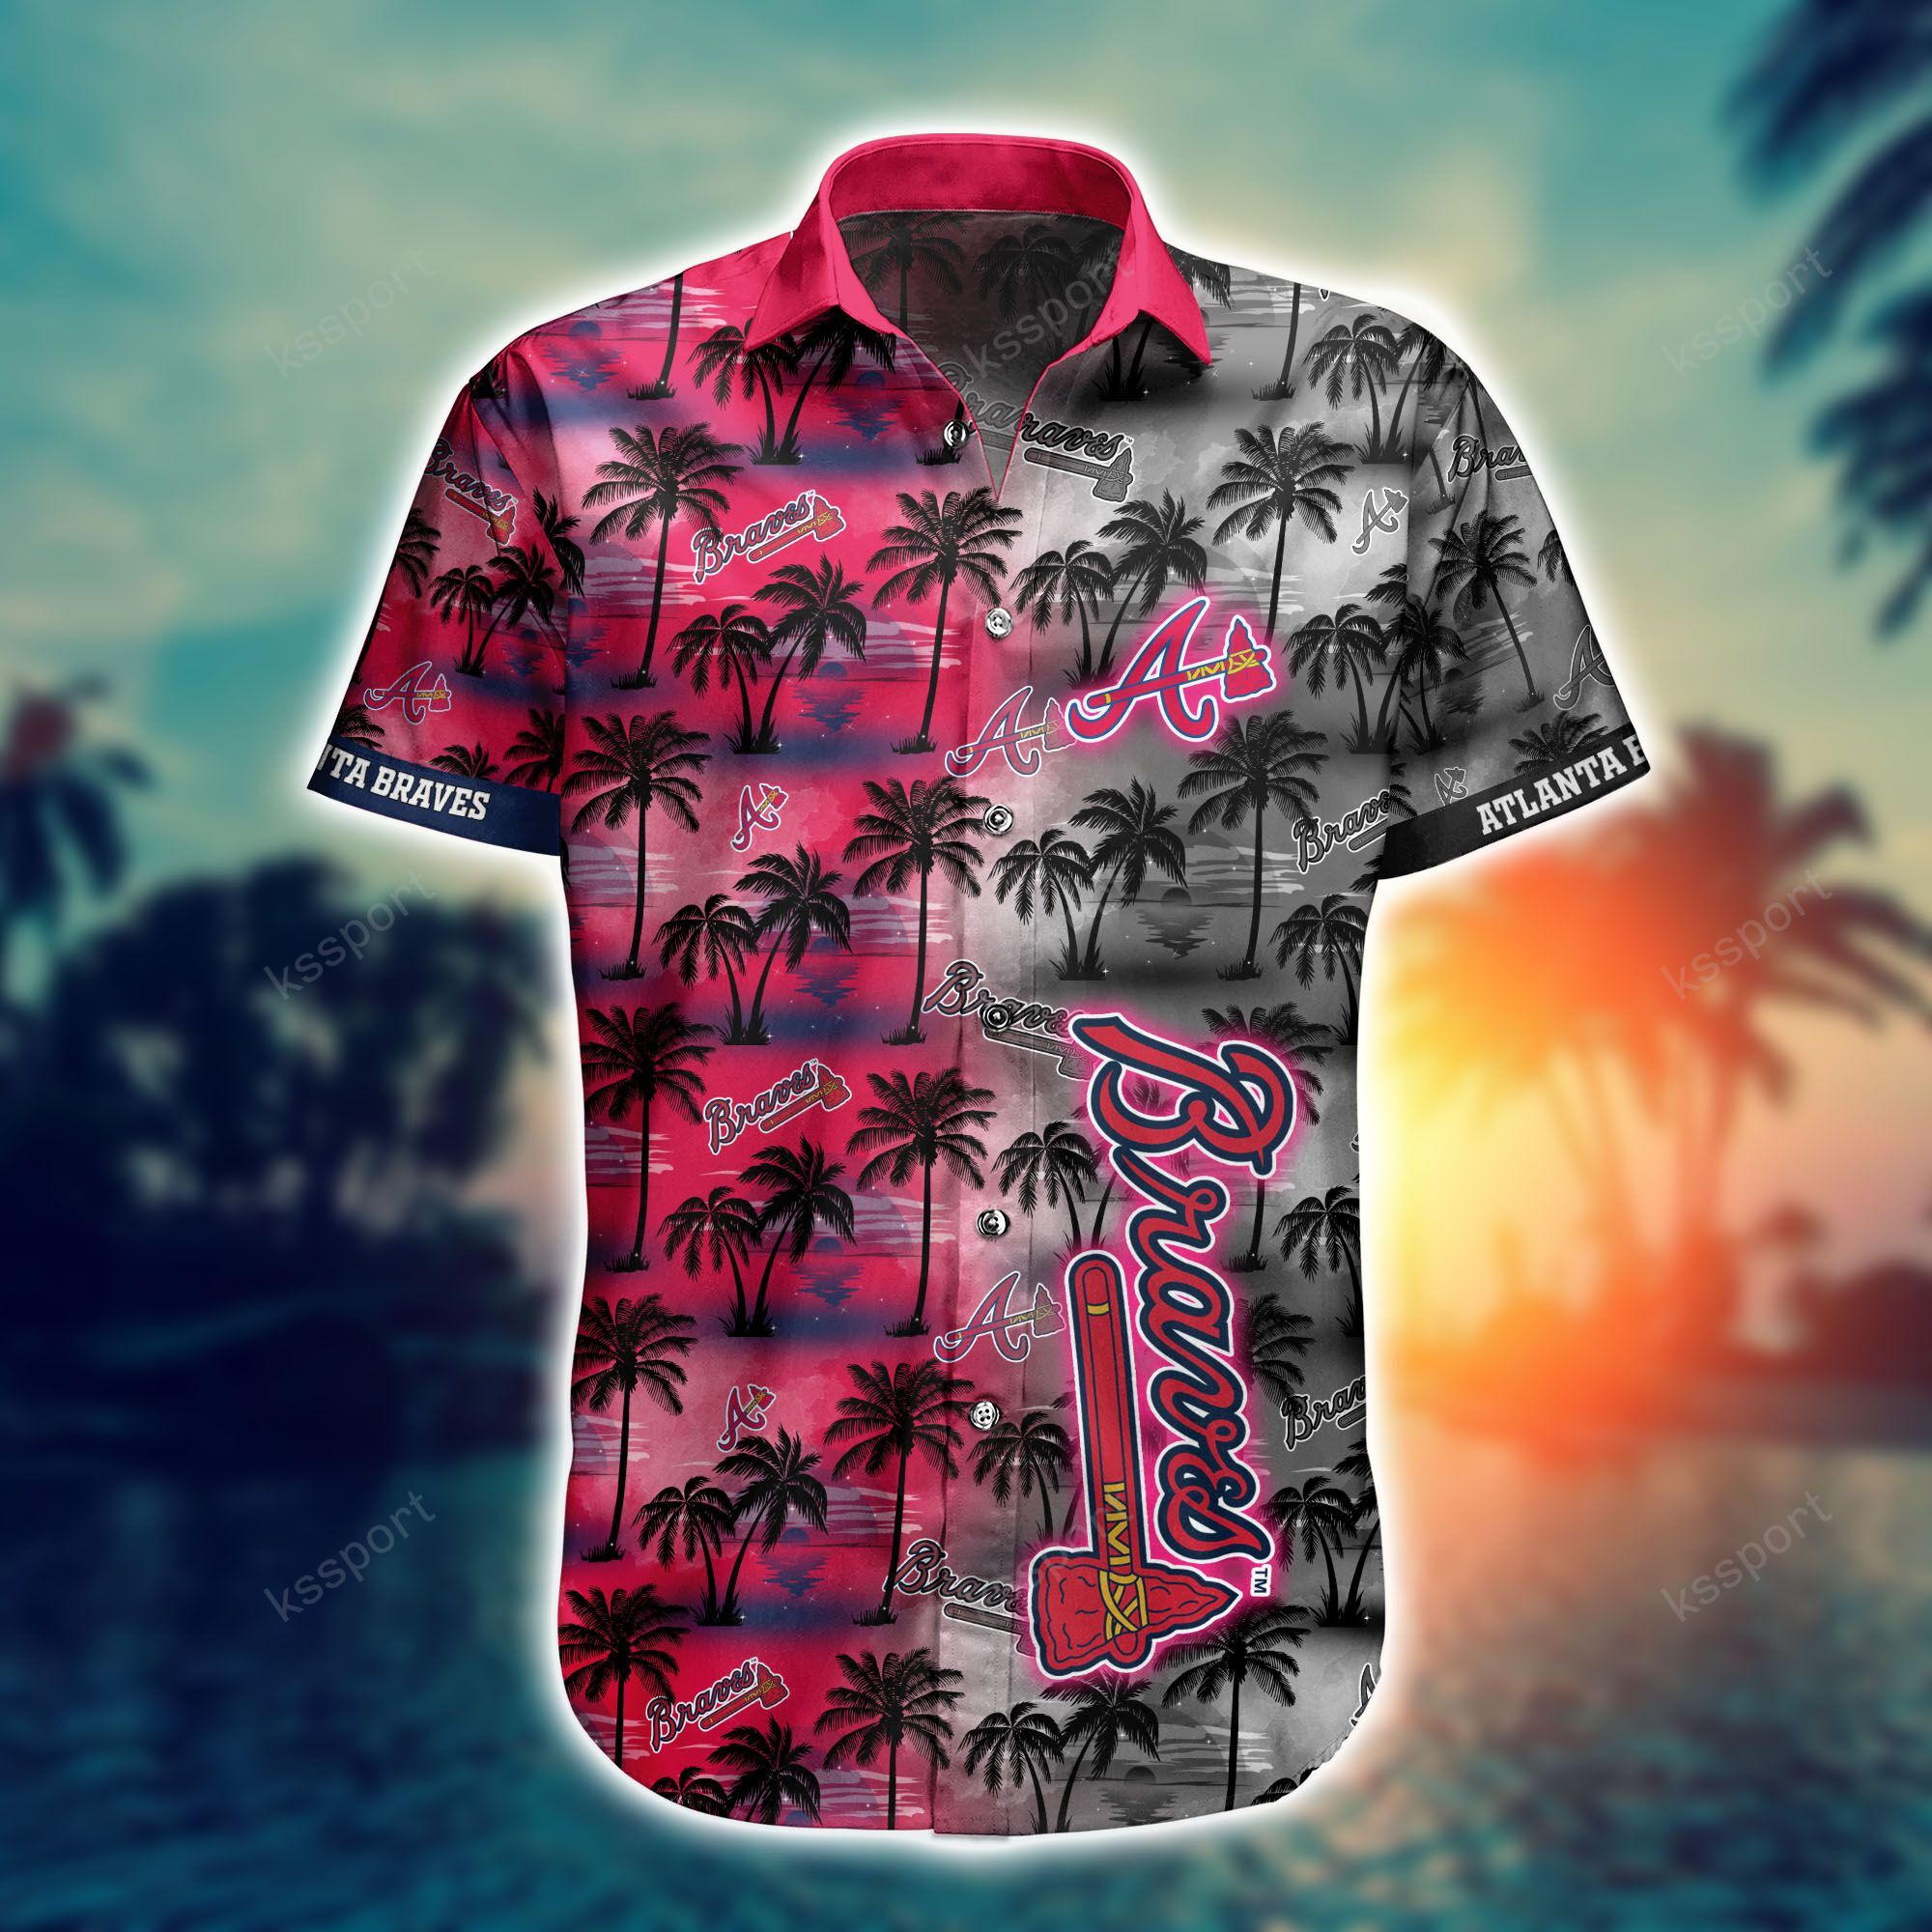 Hawaiian shirt and shorts is a great way to look stylish at a beach party 44